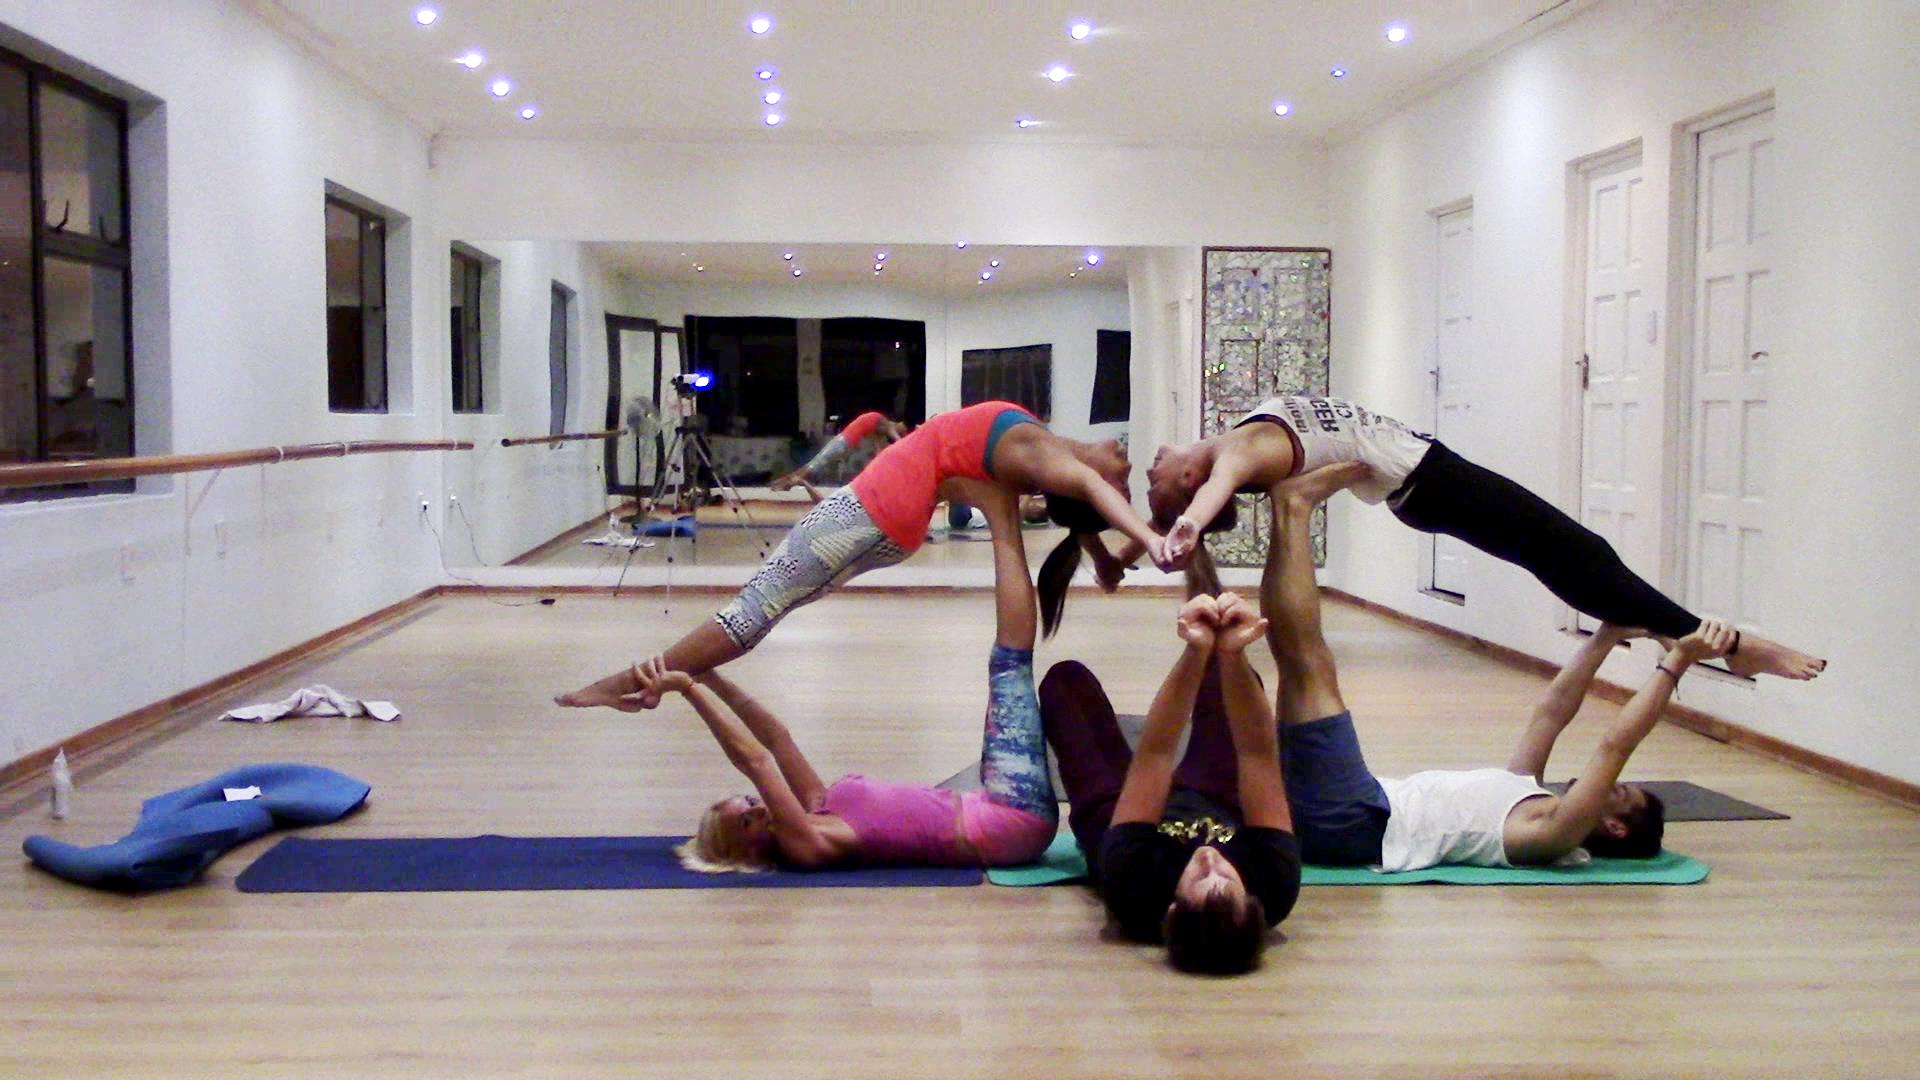 The Art of Movement - dance, yoga and fitness studio Image